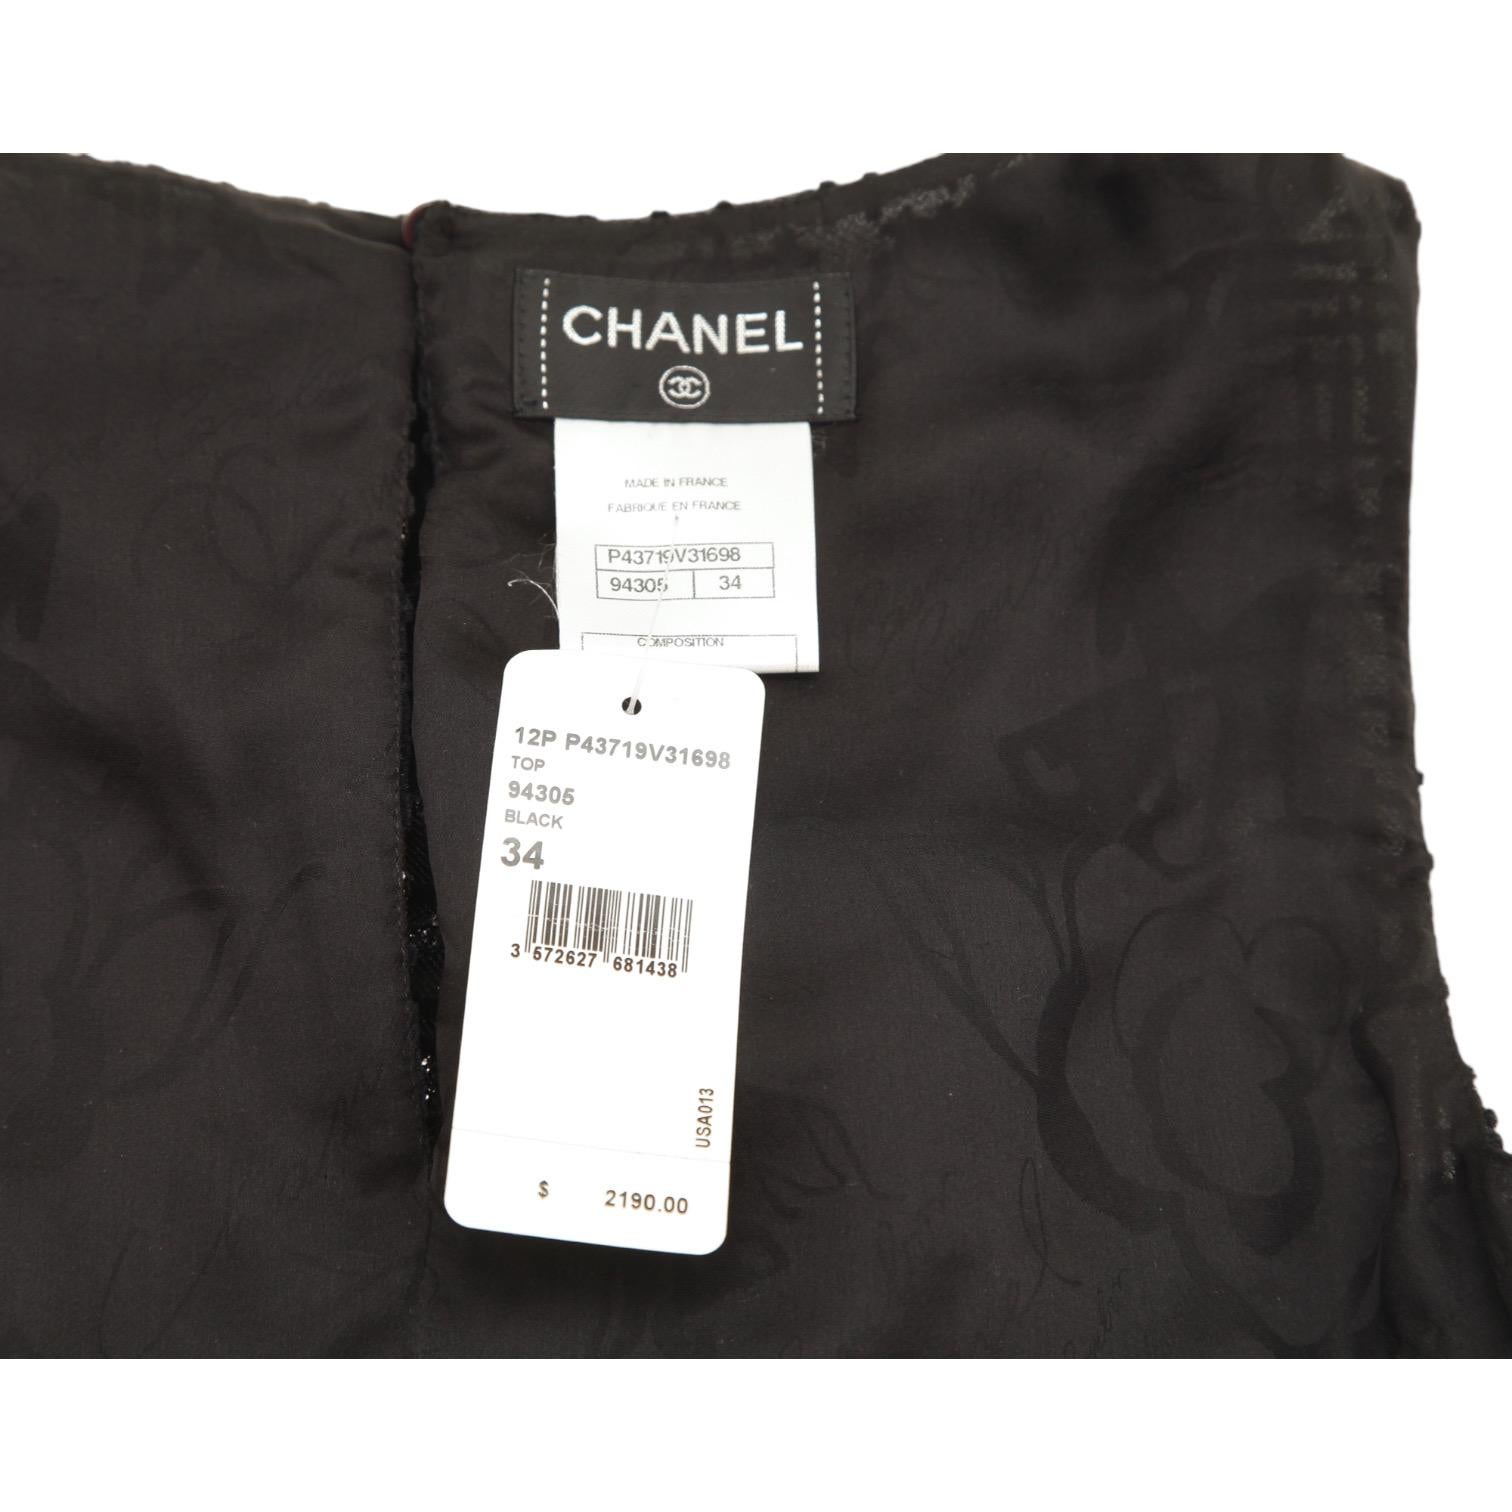 CHANEL Blouse Top Shirt Black Sleeveless CC Button Sz 34 12P 2012 NWT $2190 For Sale 2